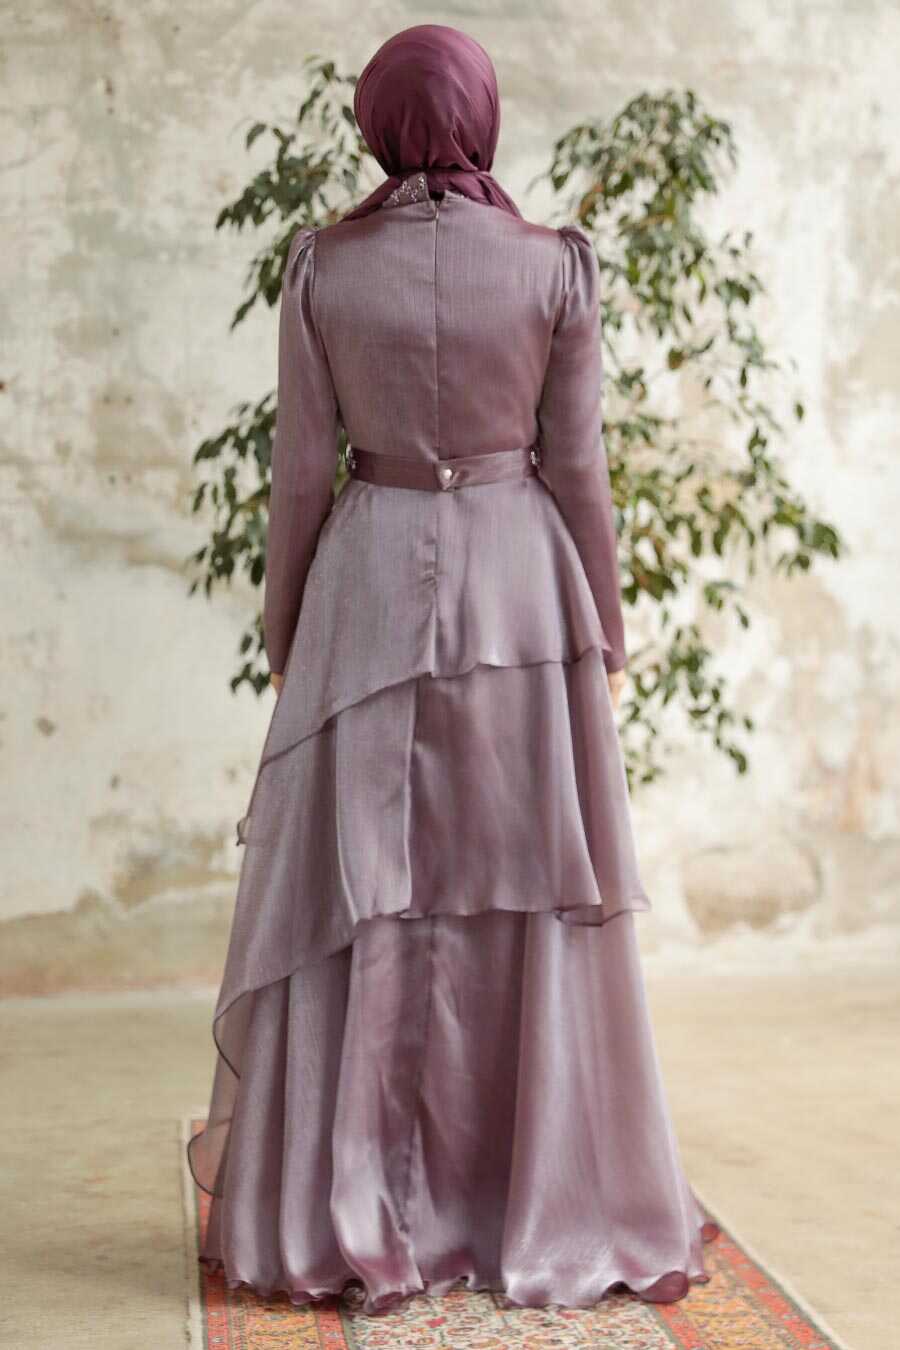 Neva Style - Luxorious Dark Lila Islamic Clothing Evening Dress 38221KLILA